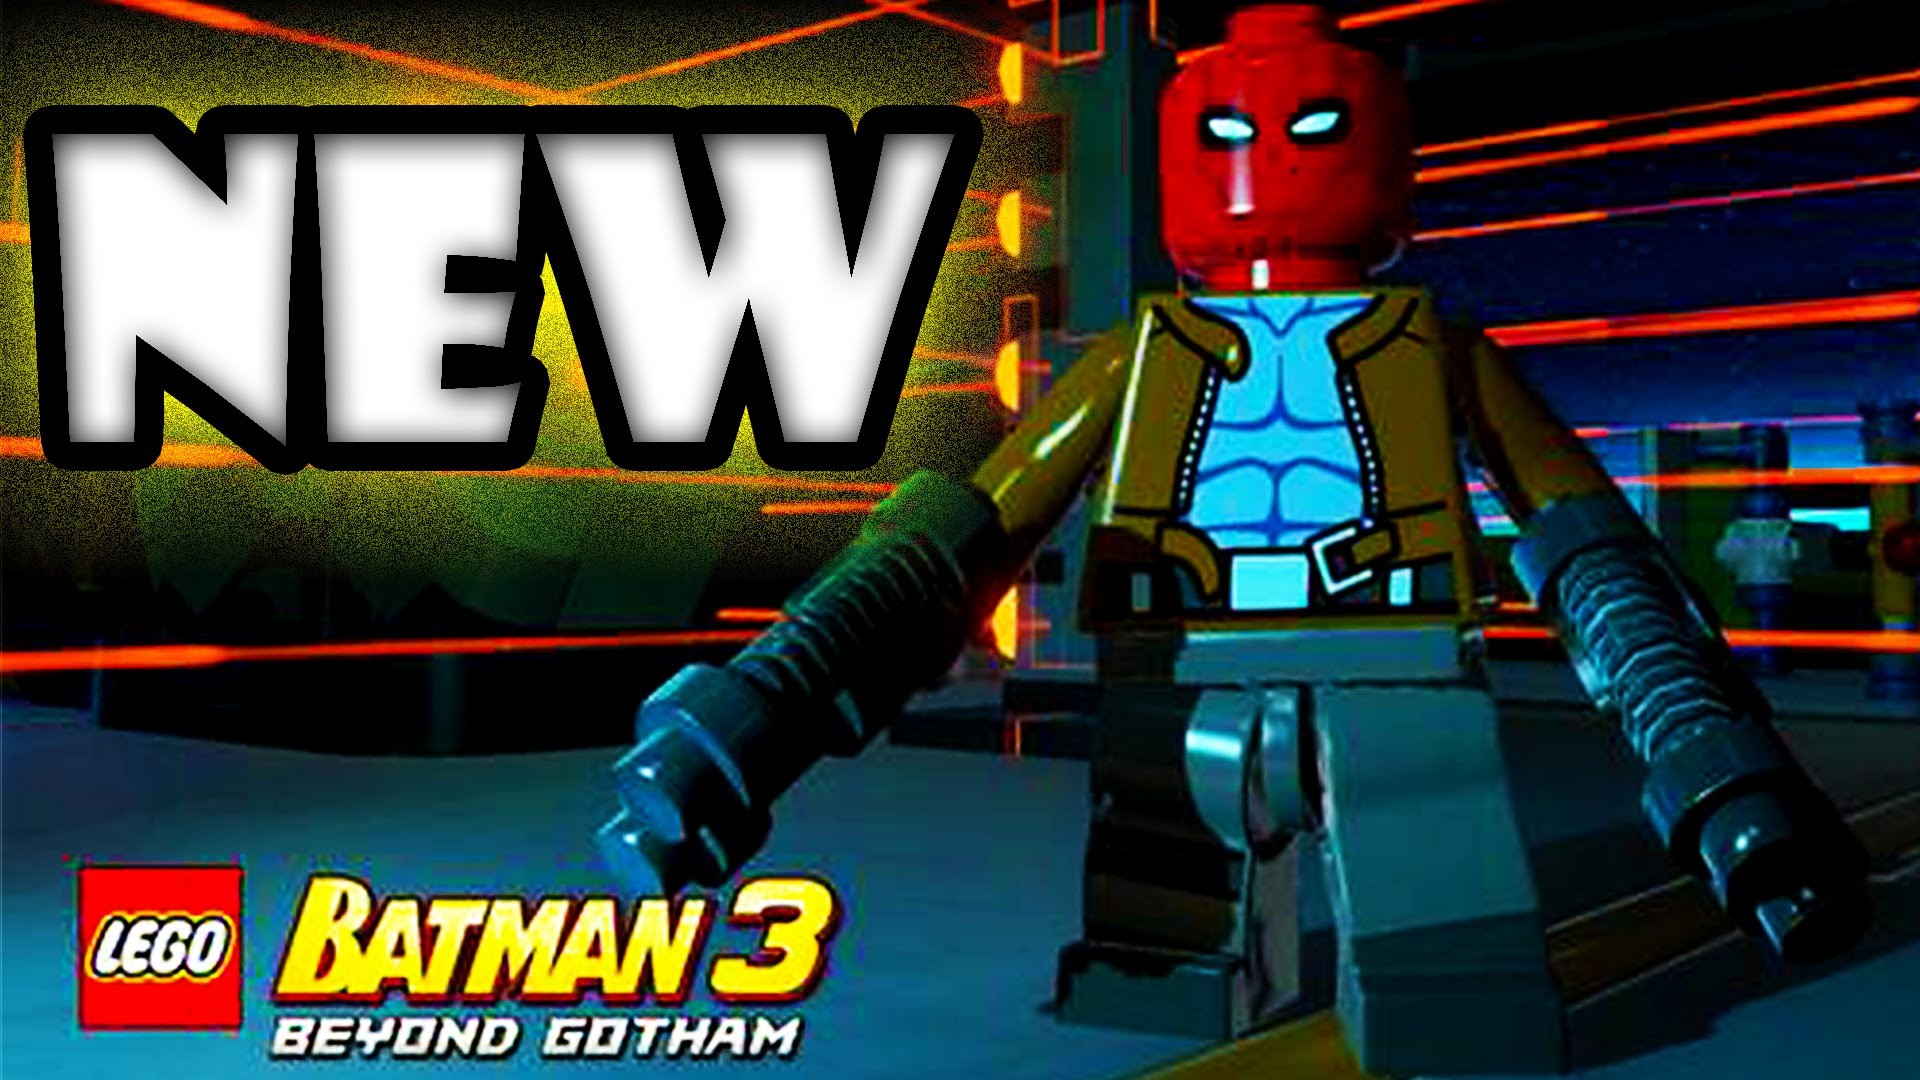 1920x1080 LEGO Batman 3 Red Hood Jason Todd! & Red Brick Idea? | Character Reveal  Countdown 4 - Beyond Gotham - YouTube